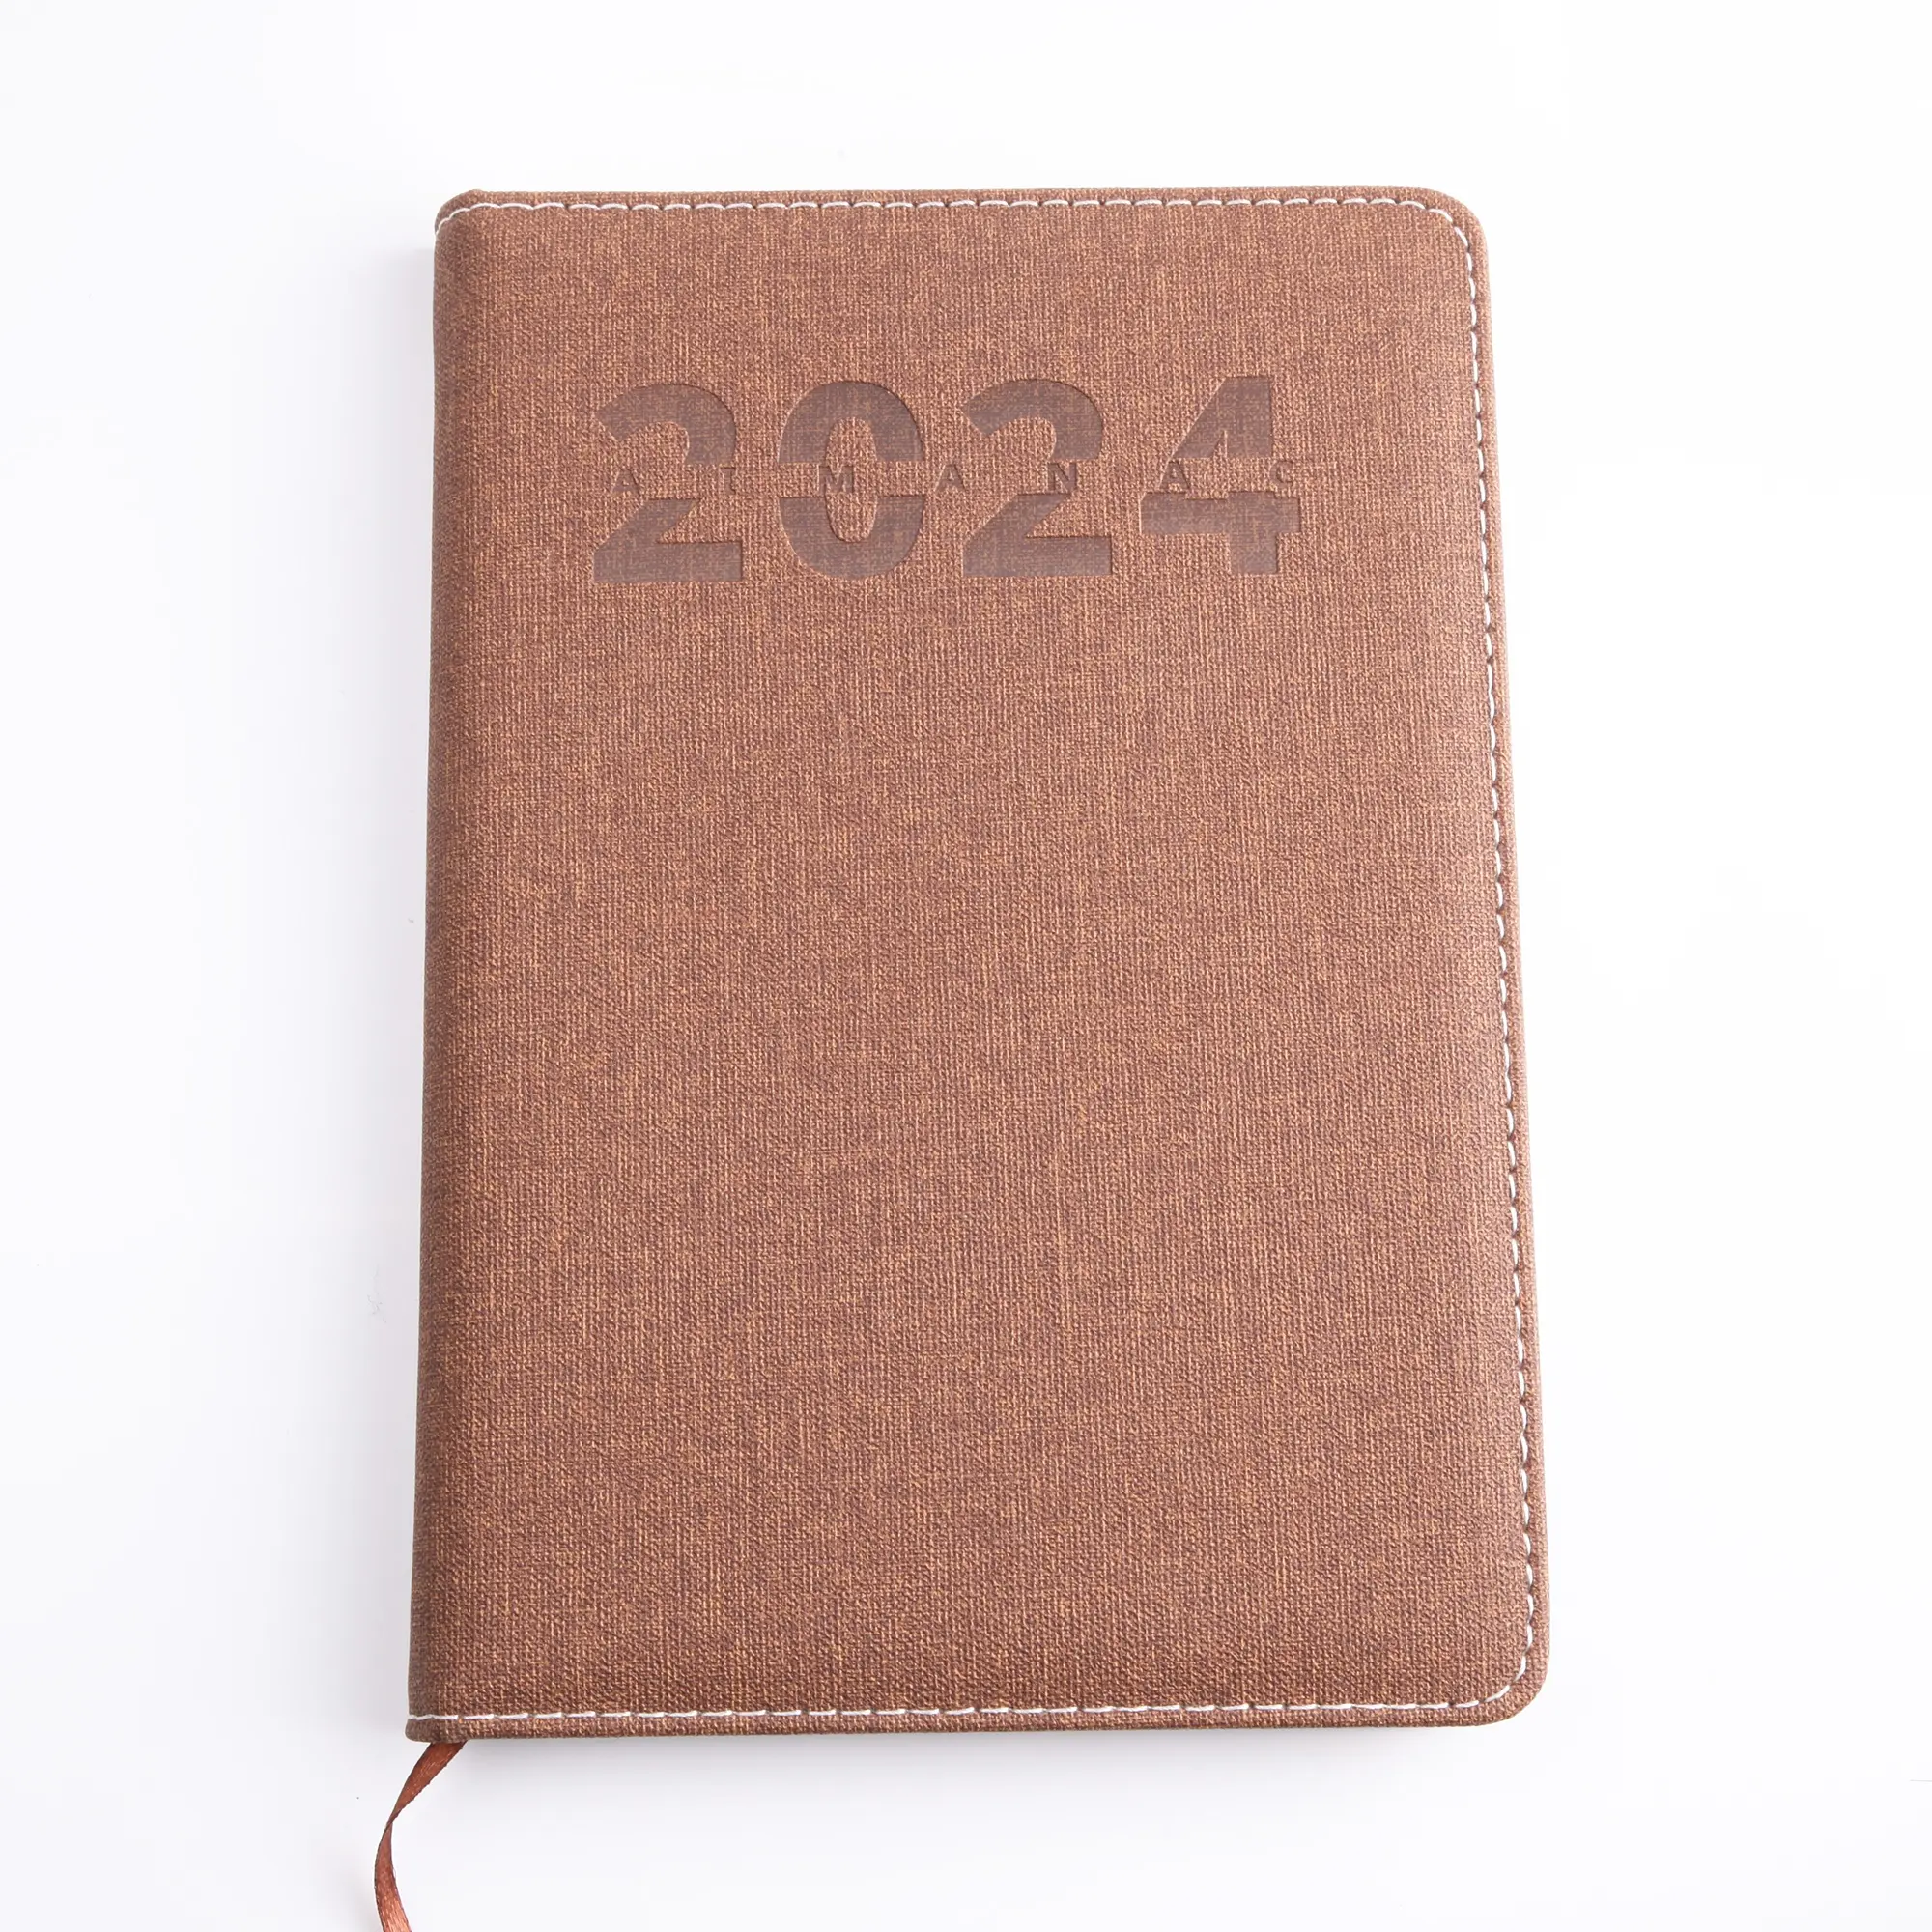 Writing Diary Notebook Customize notebooks agenda planner custom printing languages